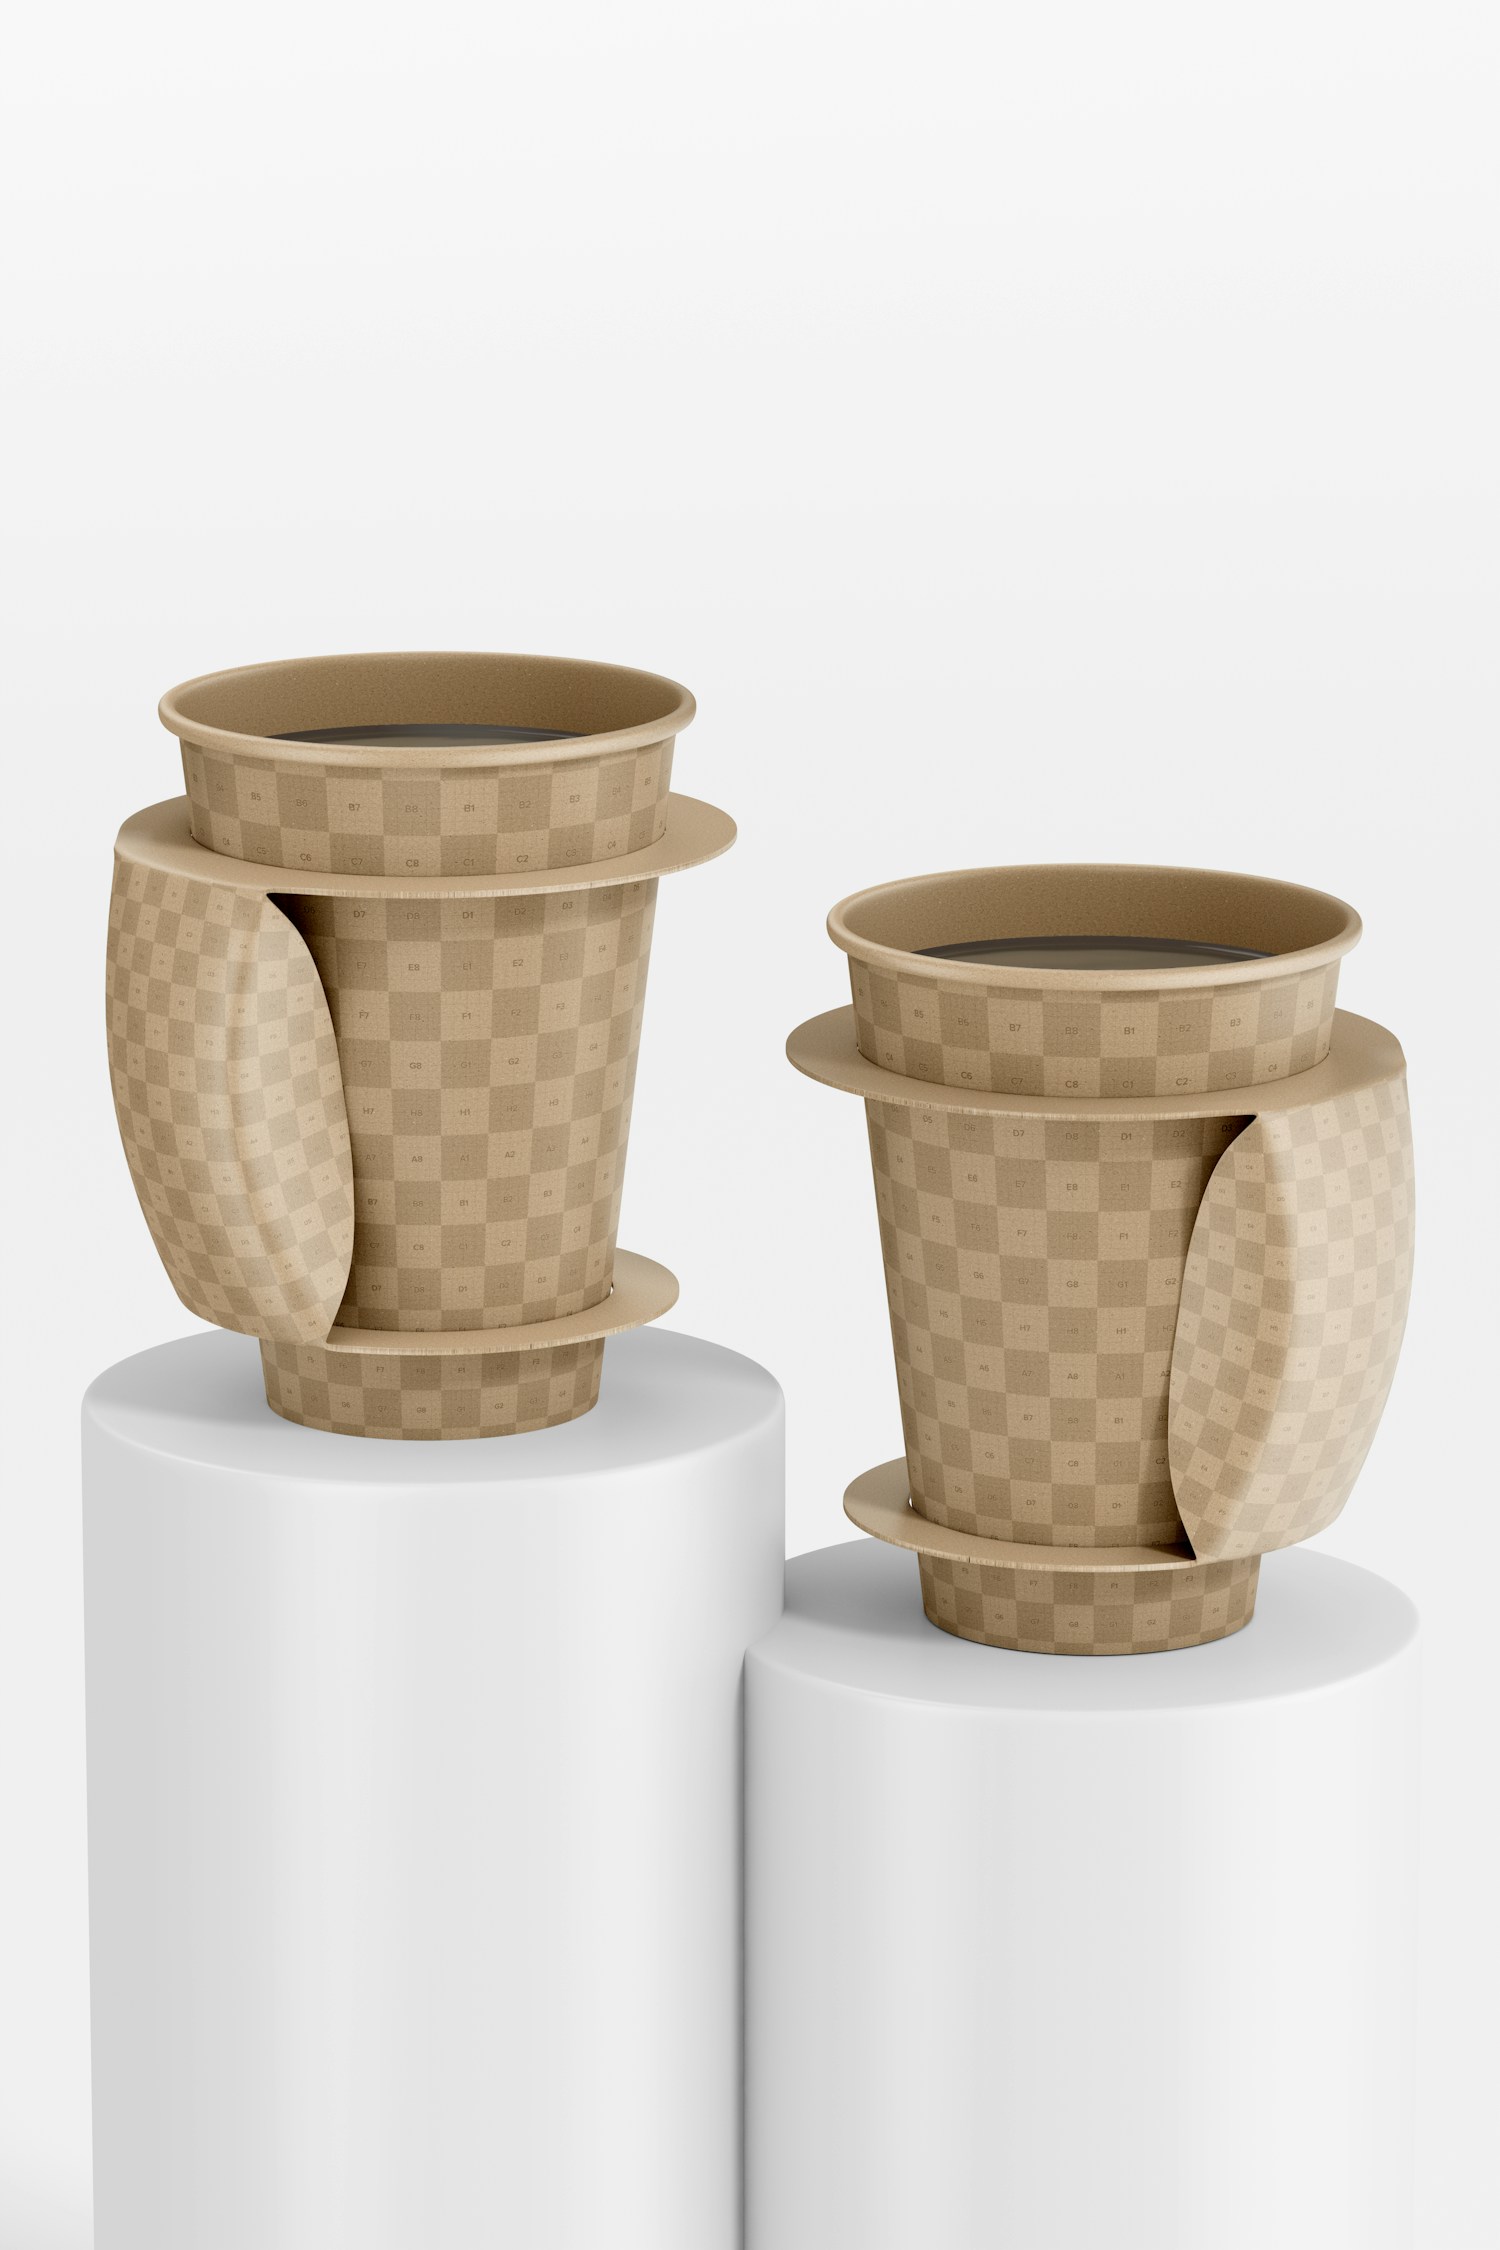 Coffee Cups with Handle Mockup, on Podium